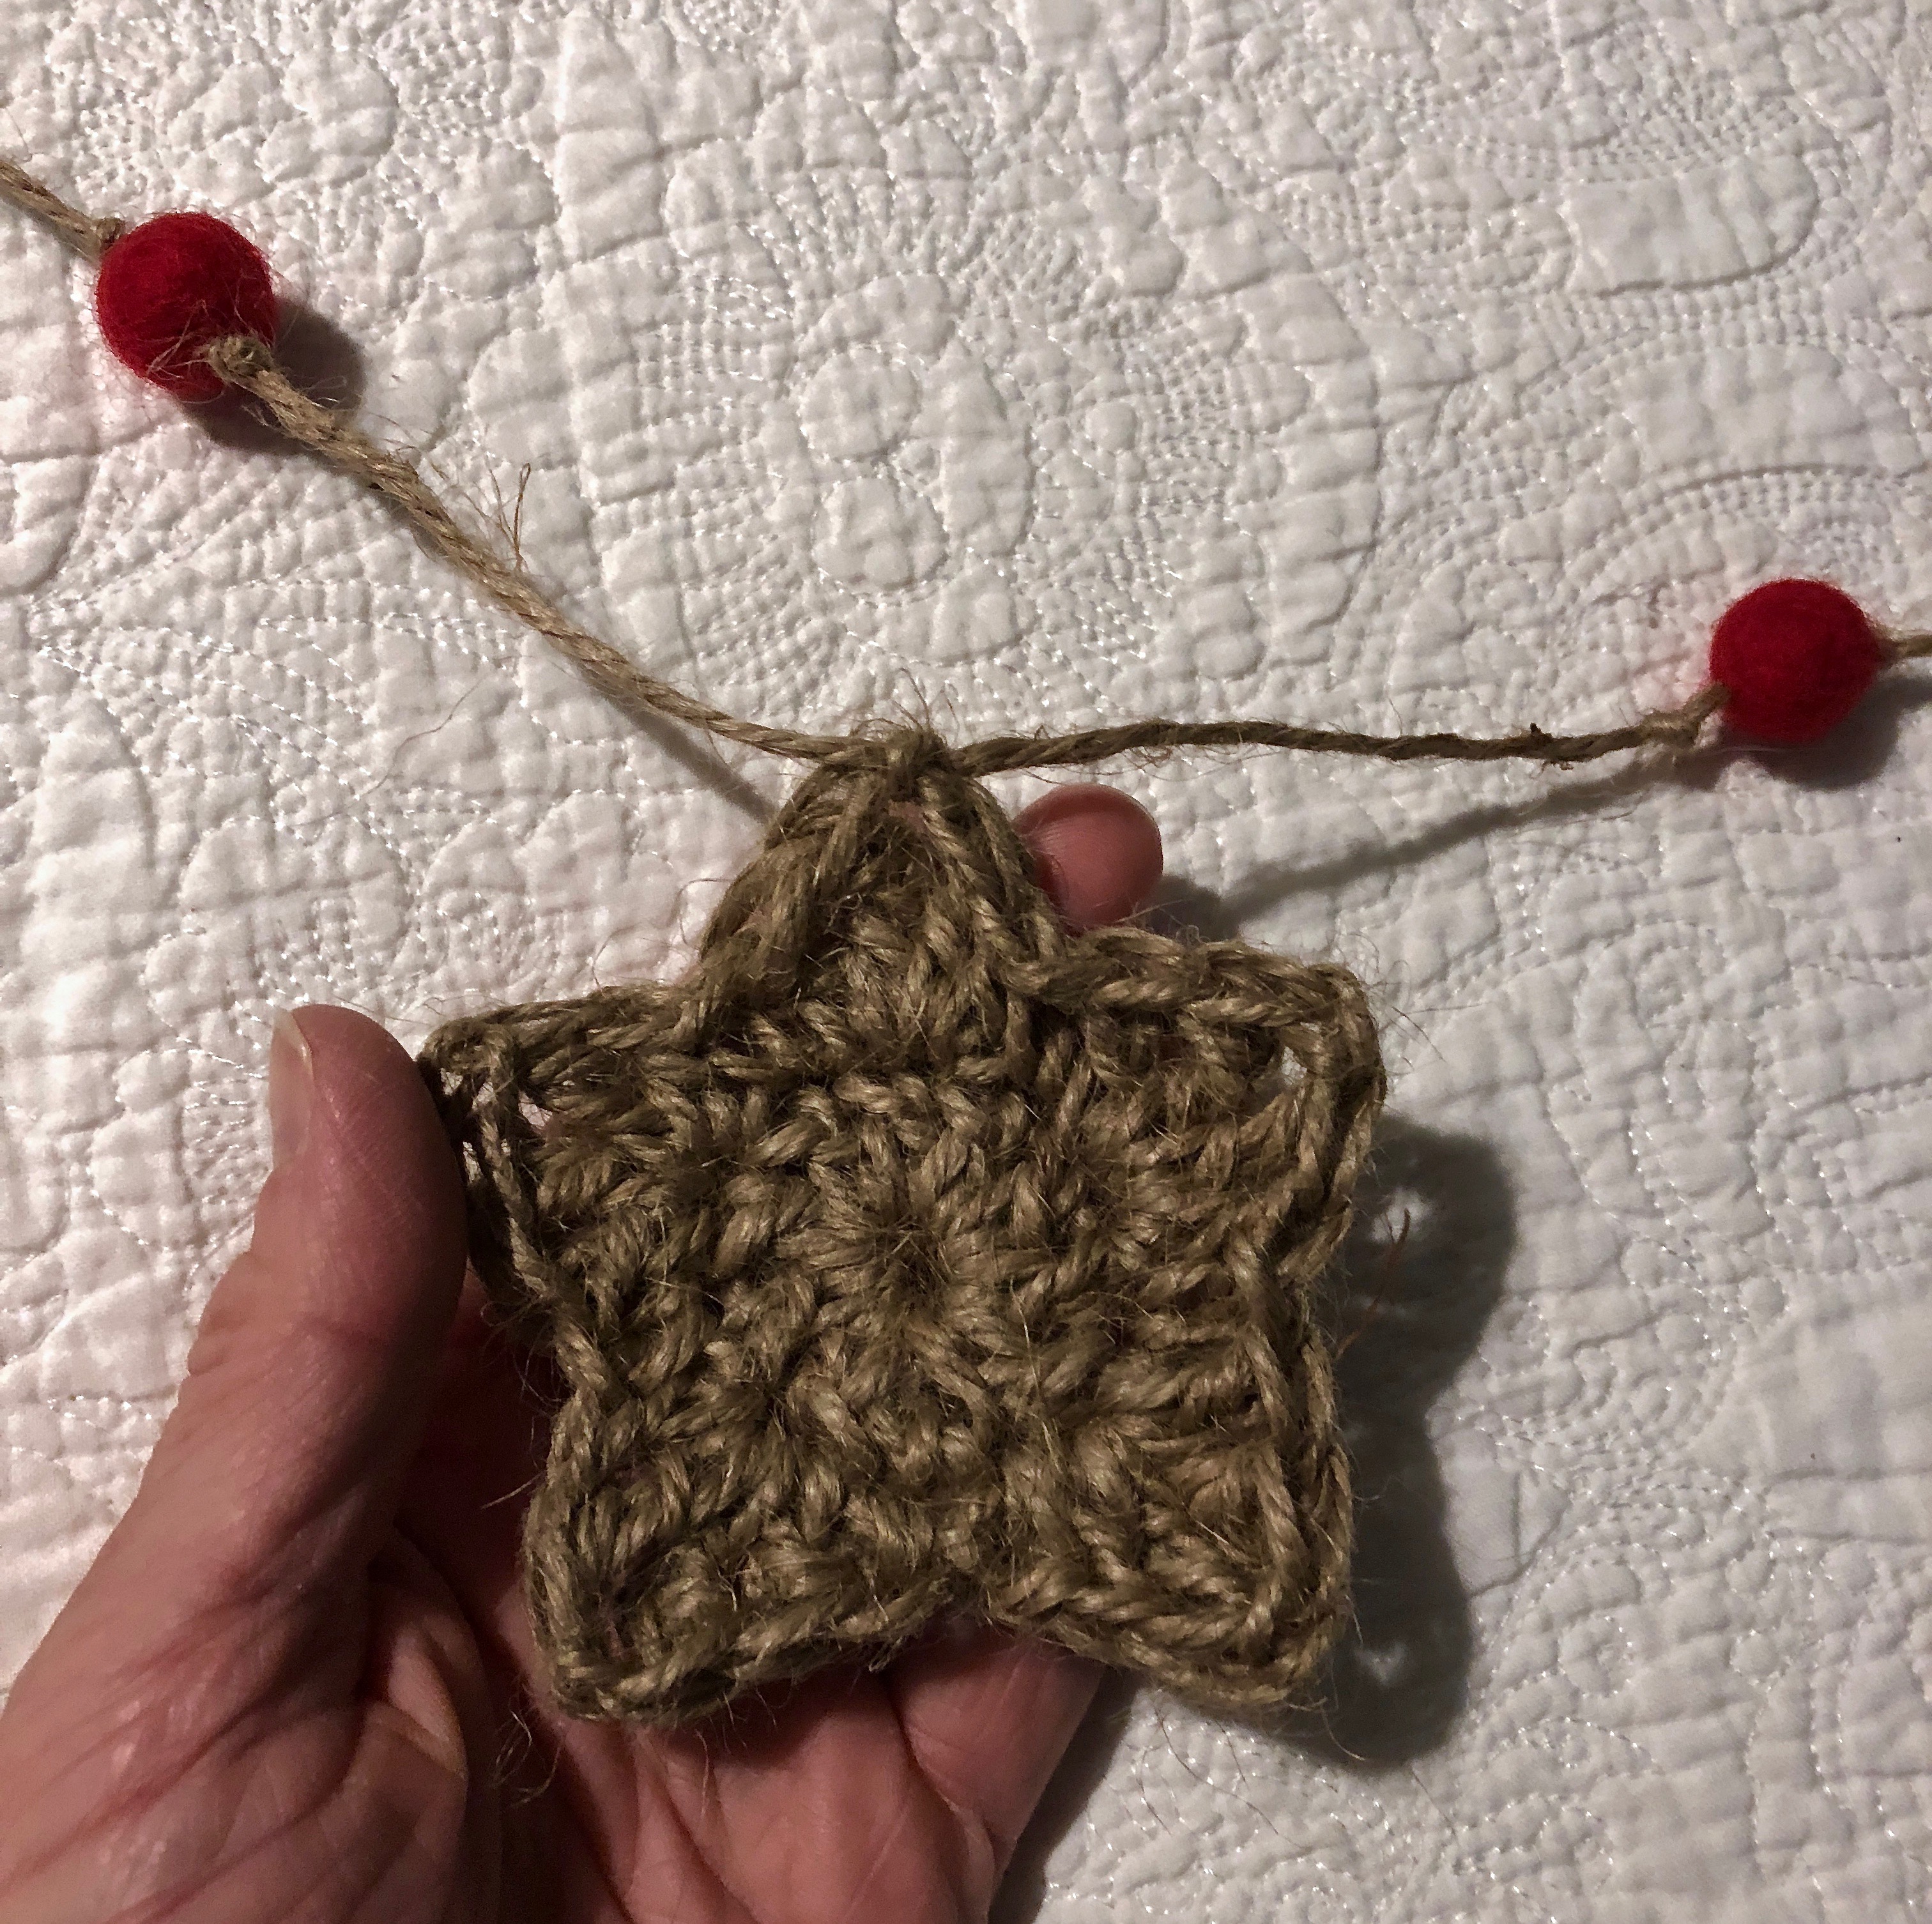 Jute twine, crocheted medium sized star and red felt pom-pom garland.